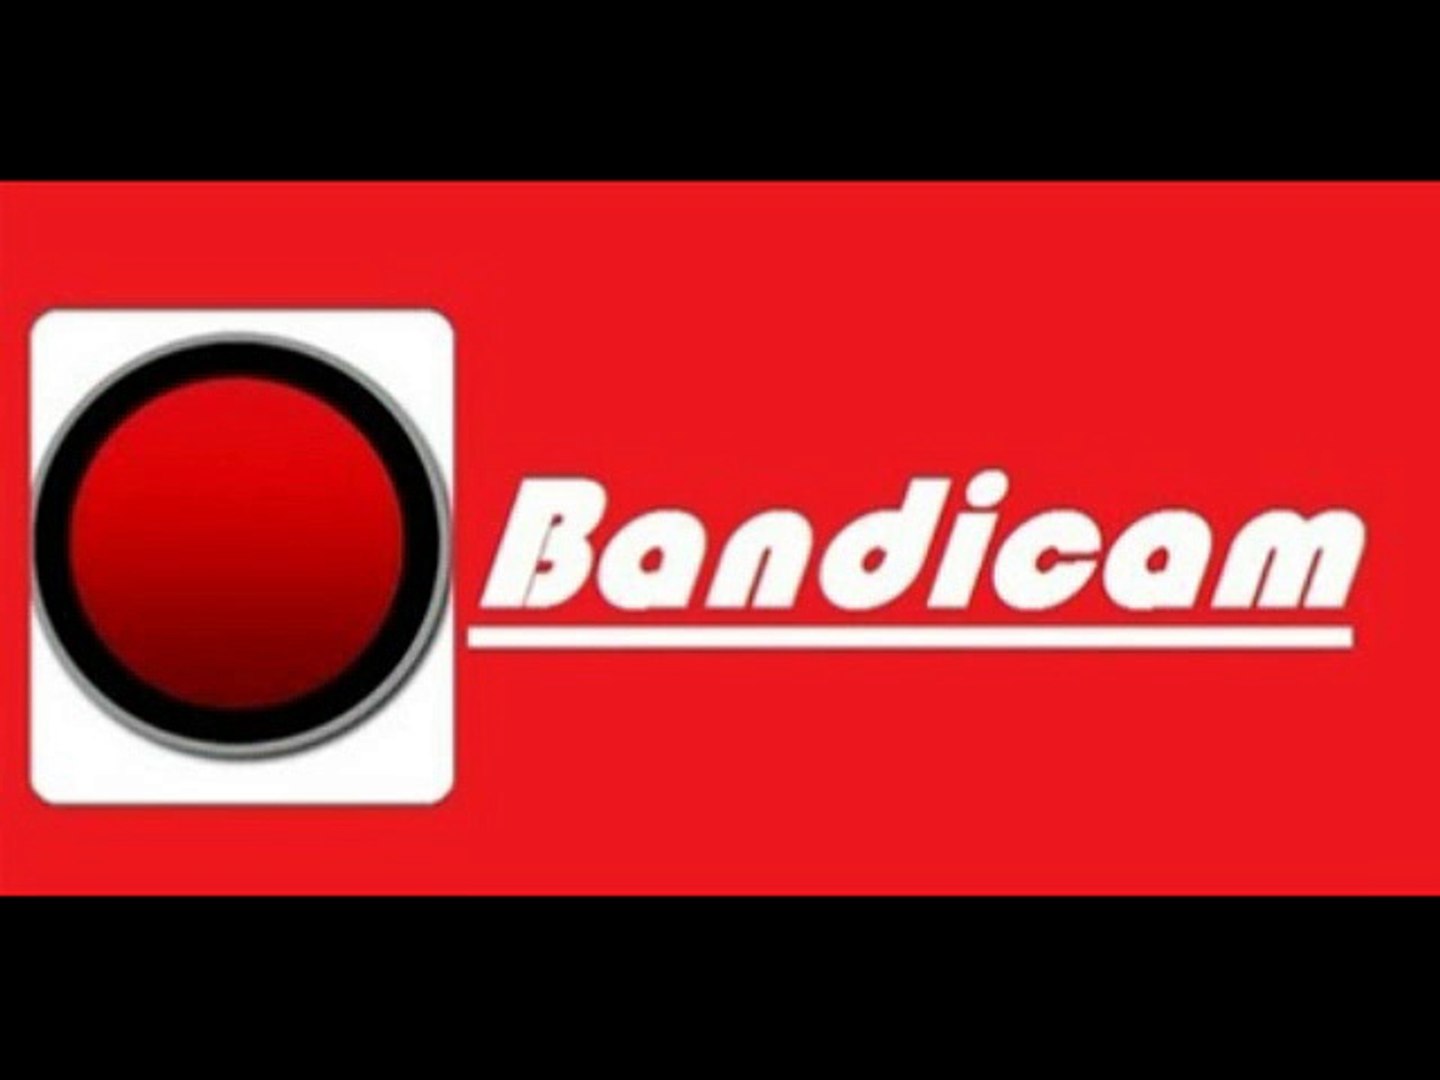 bandicam download full version kickass